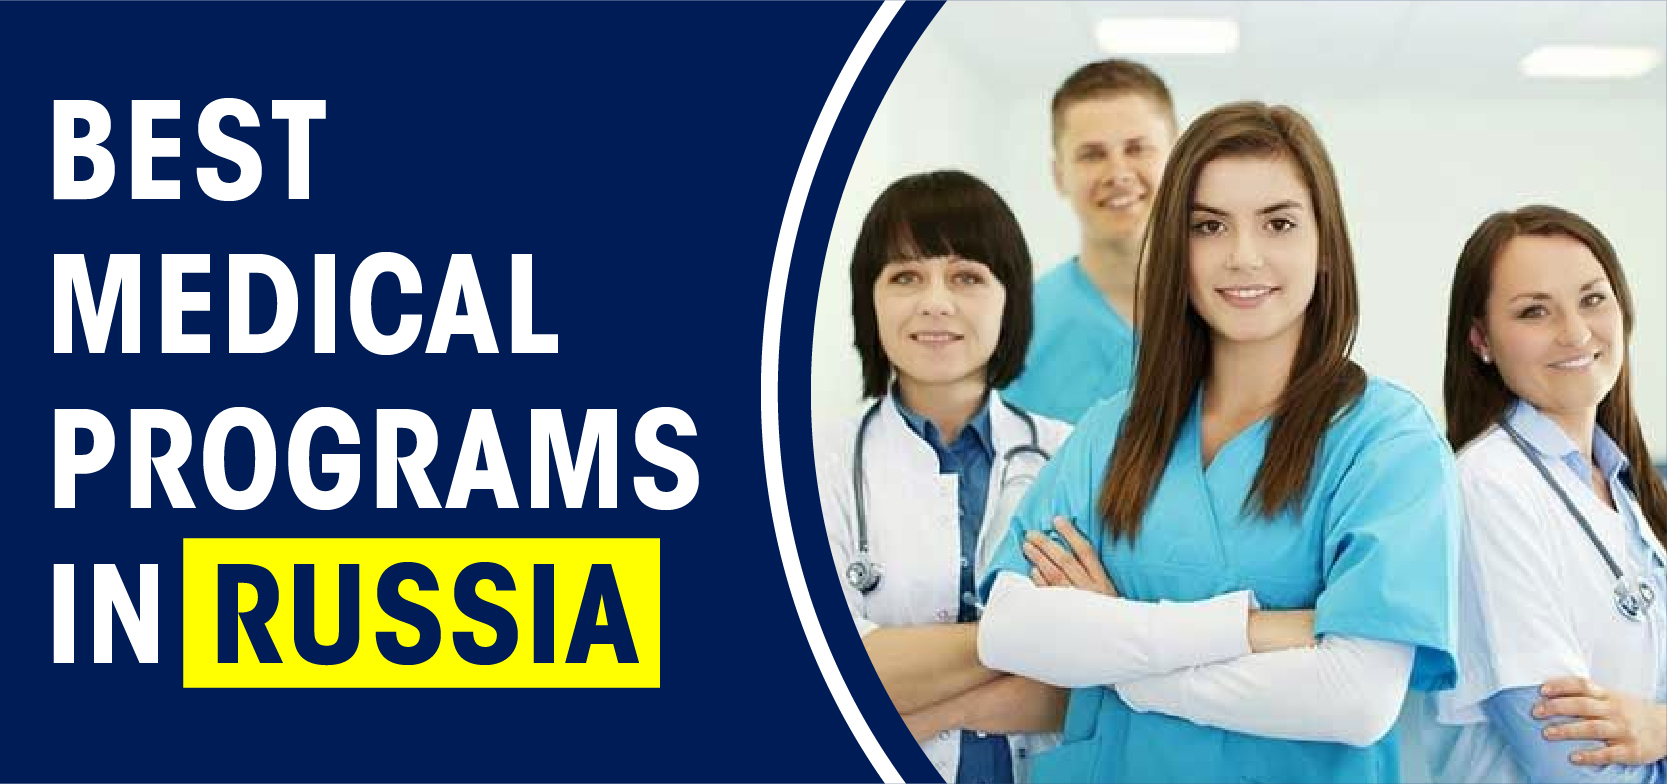 Best Medical Programs in Russia